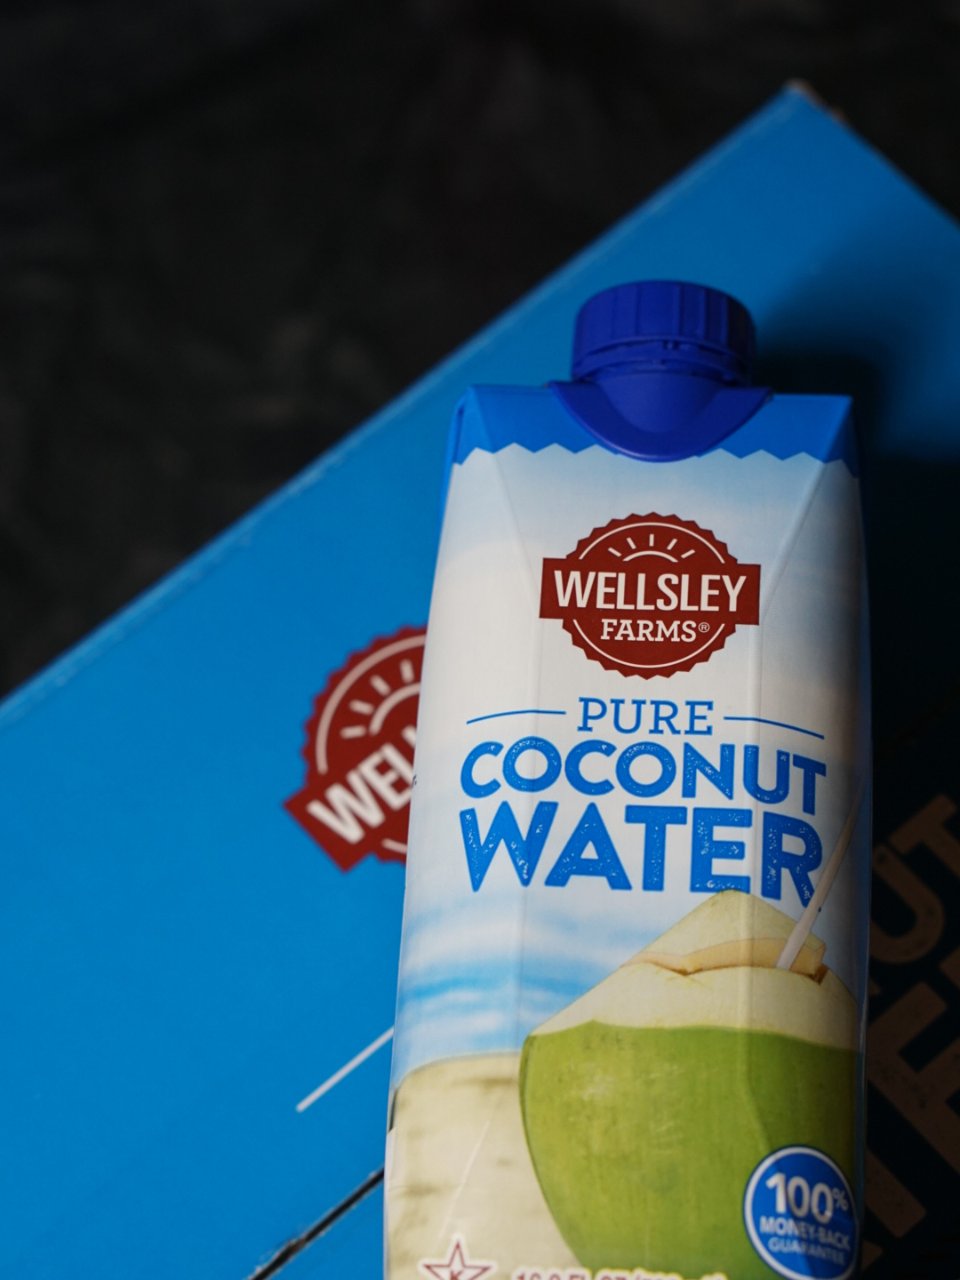 Wellsley,coconut water,BJ's Whole Club